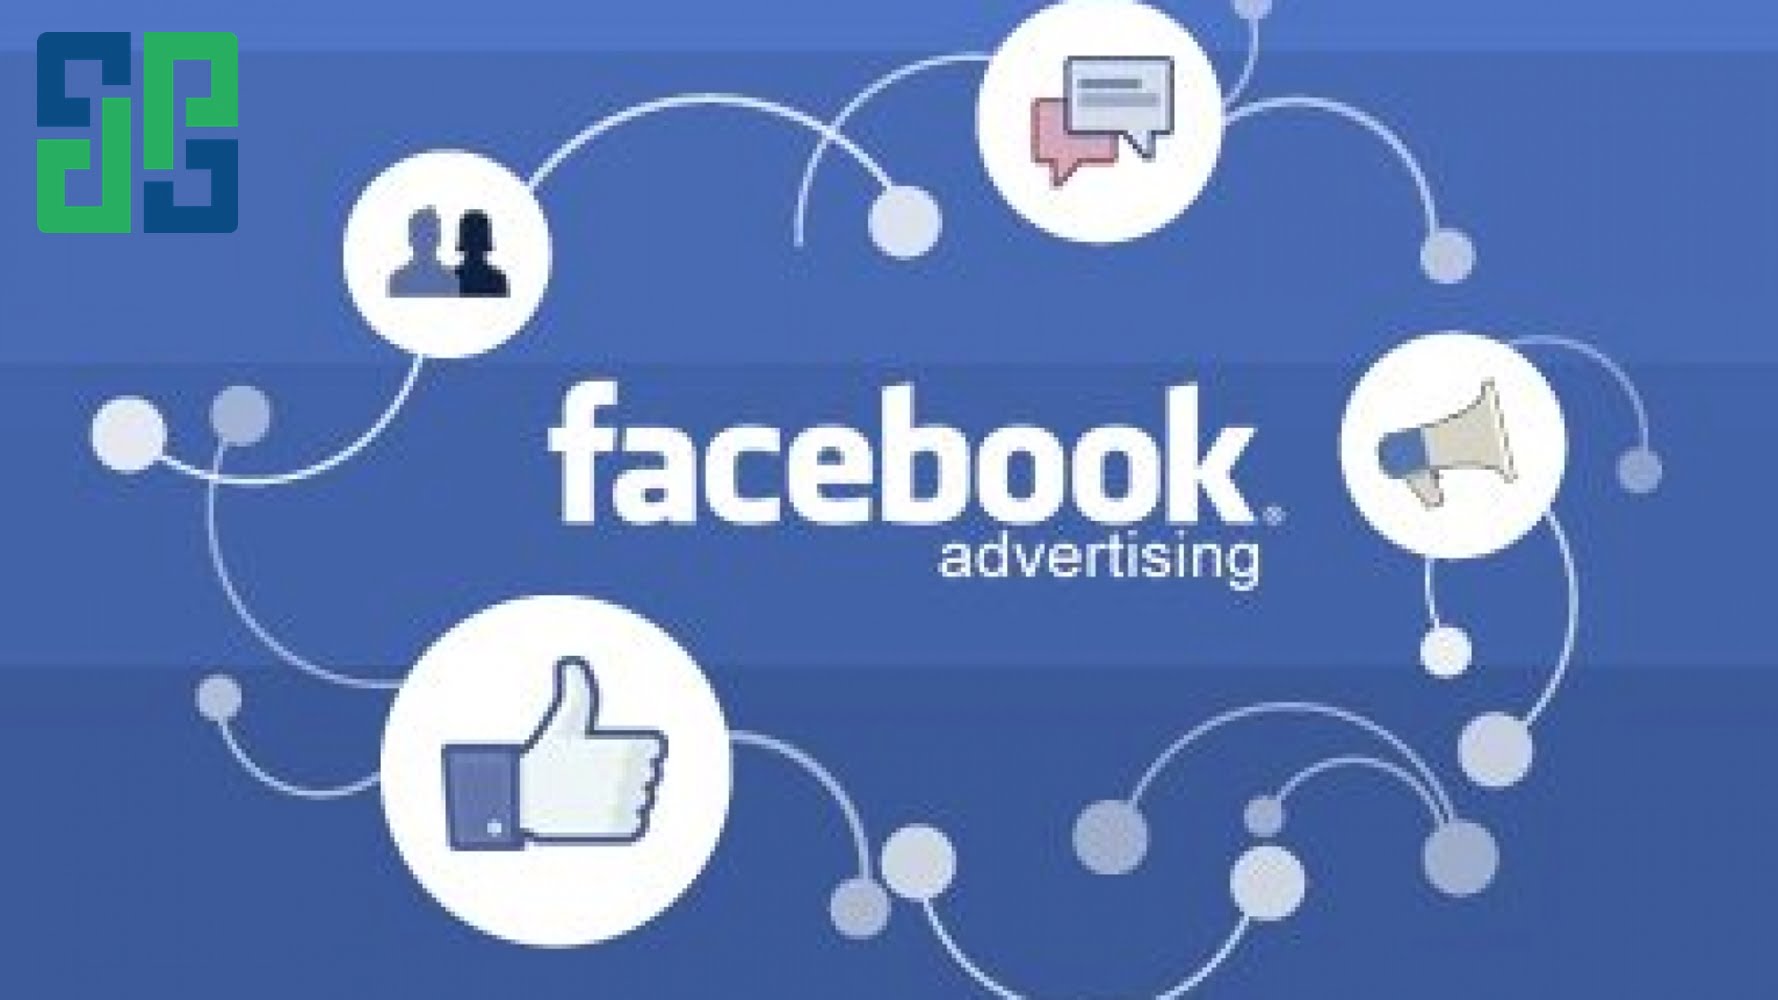 Empresa de publicidade Facebook de maior prestígio hoje